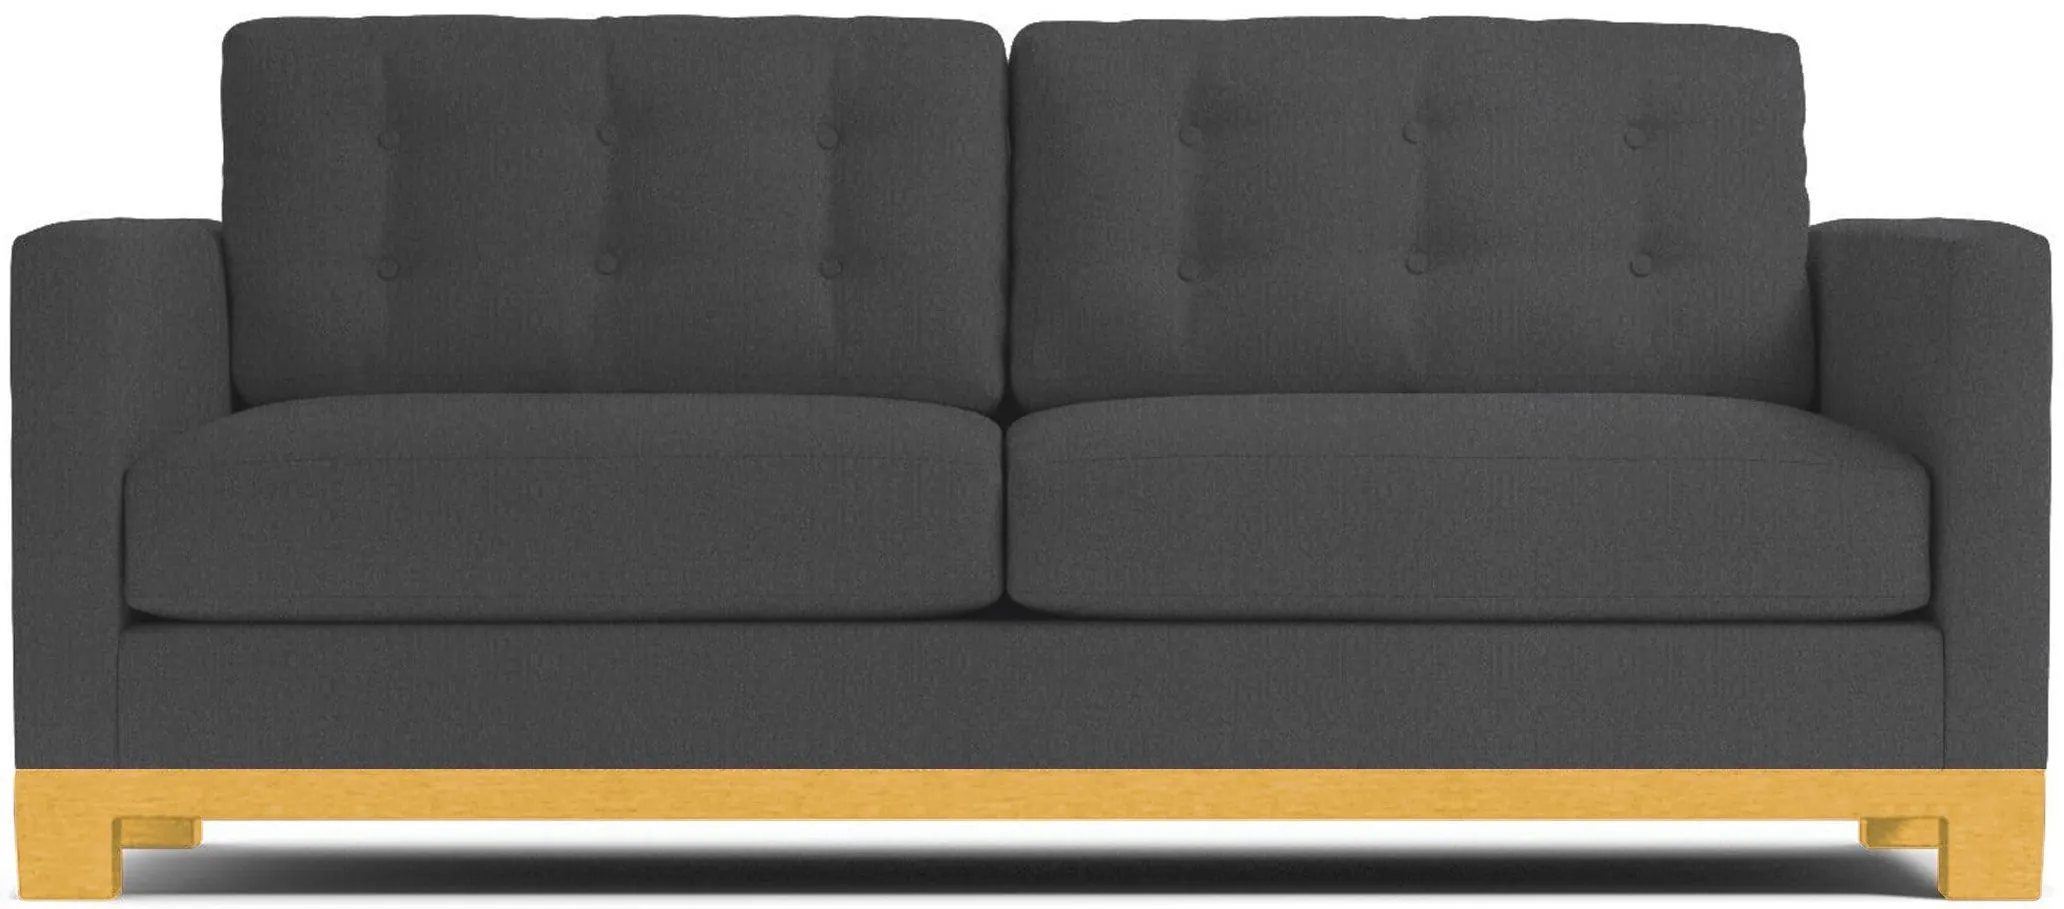 Logan Drive Queen Size Sleeper Sofa Bed